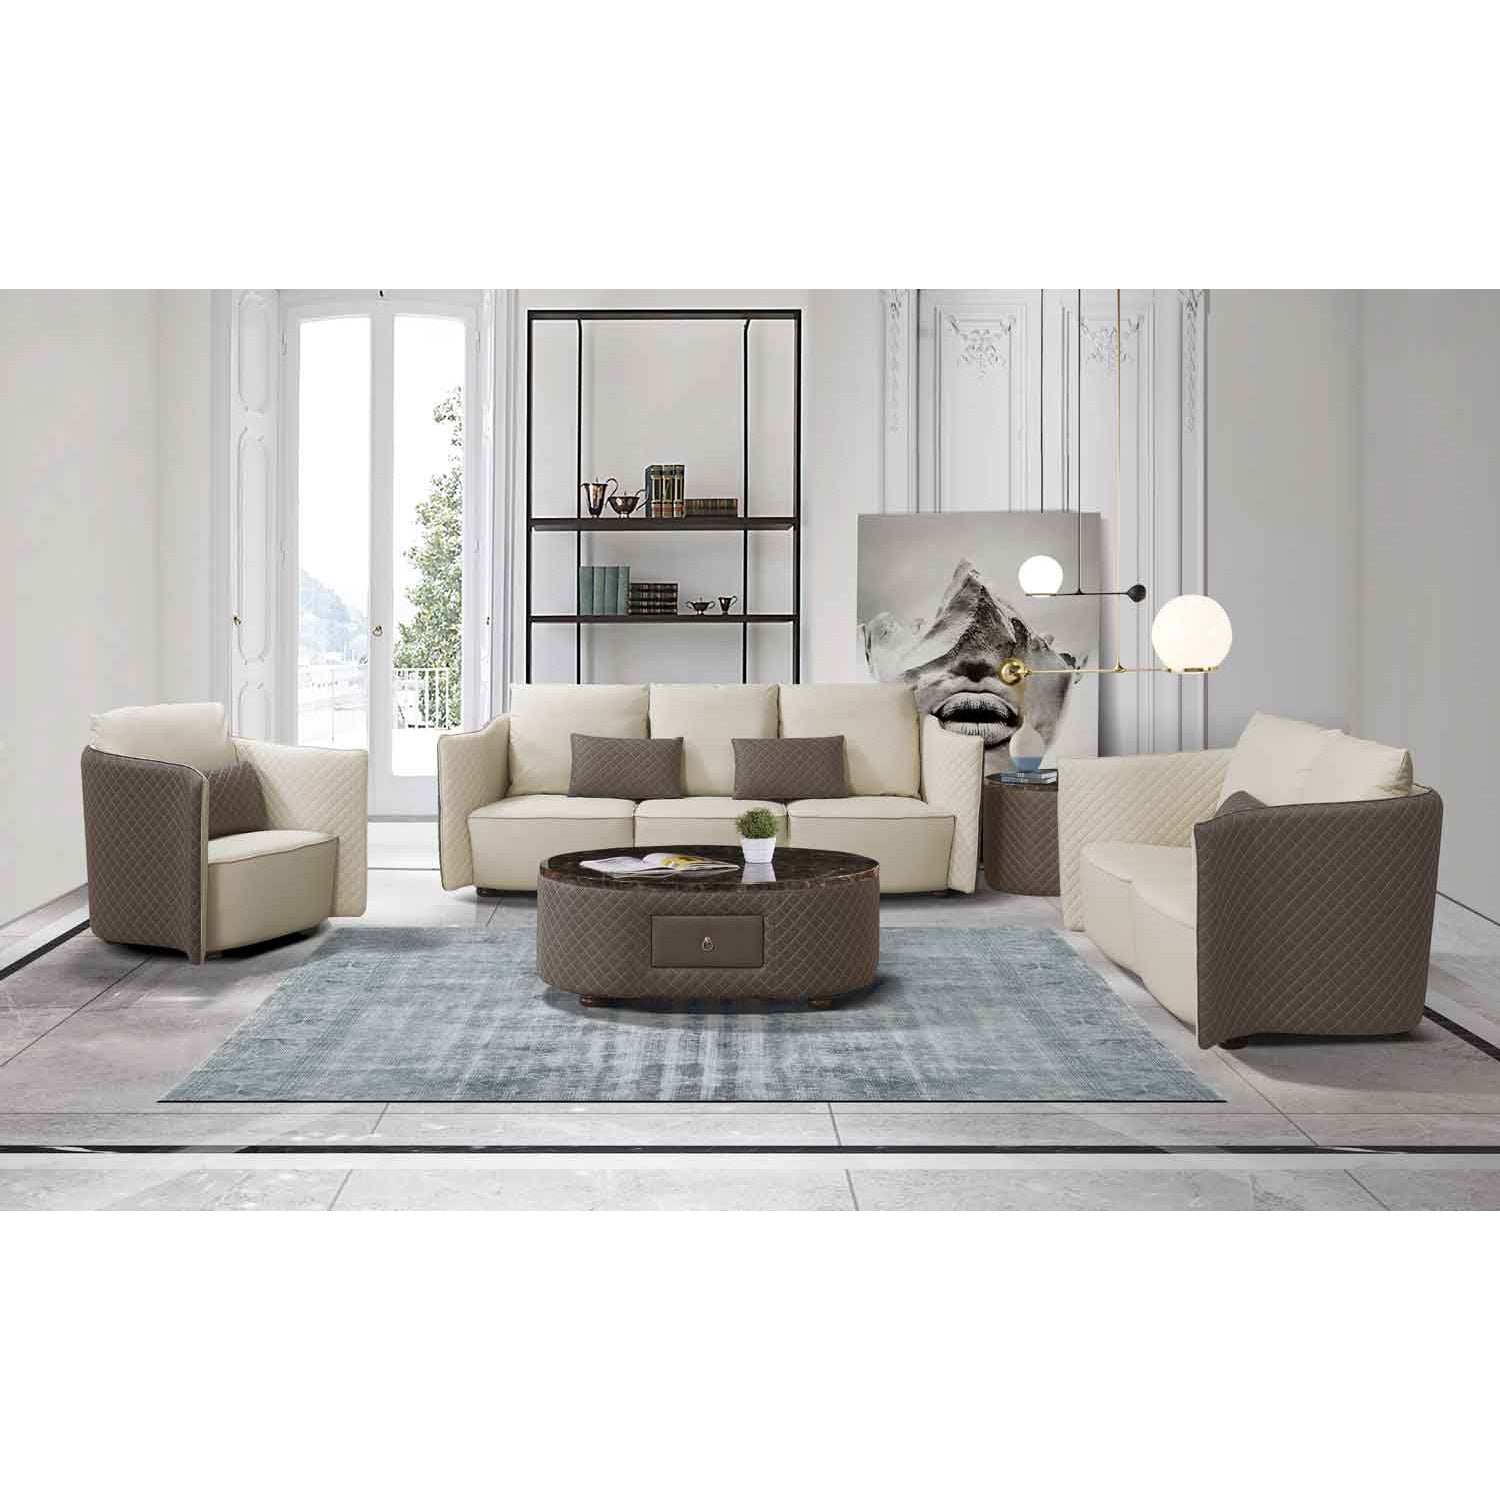 European Furniture - Makassar Chair in Grey & Taupe - 52550-C - New Star Living